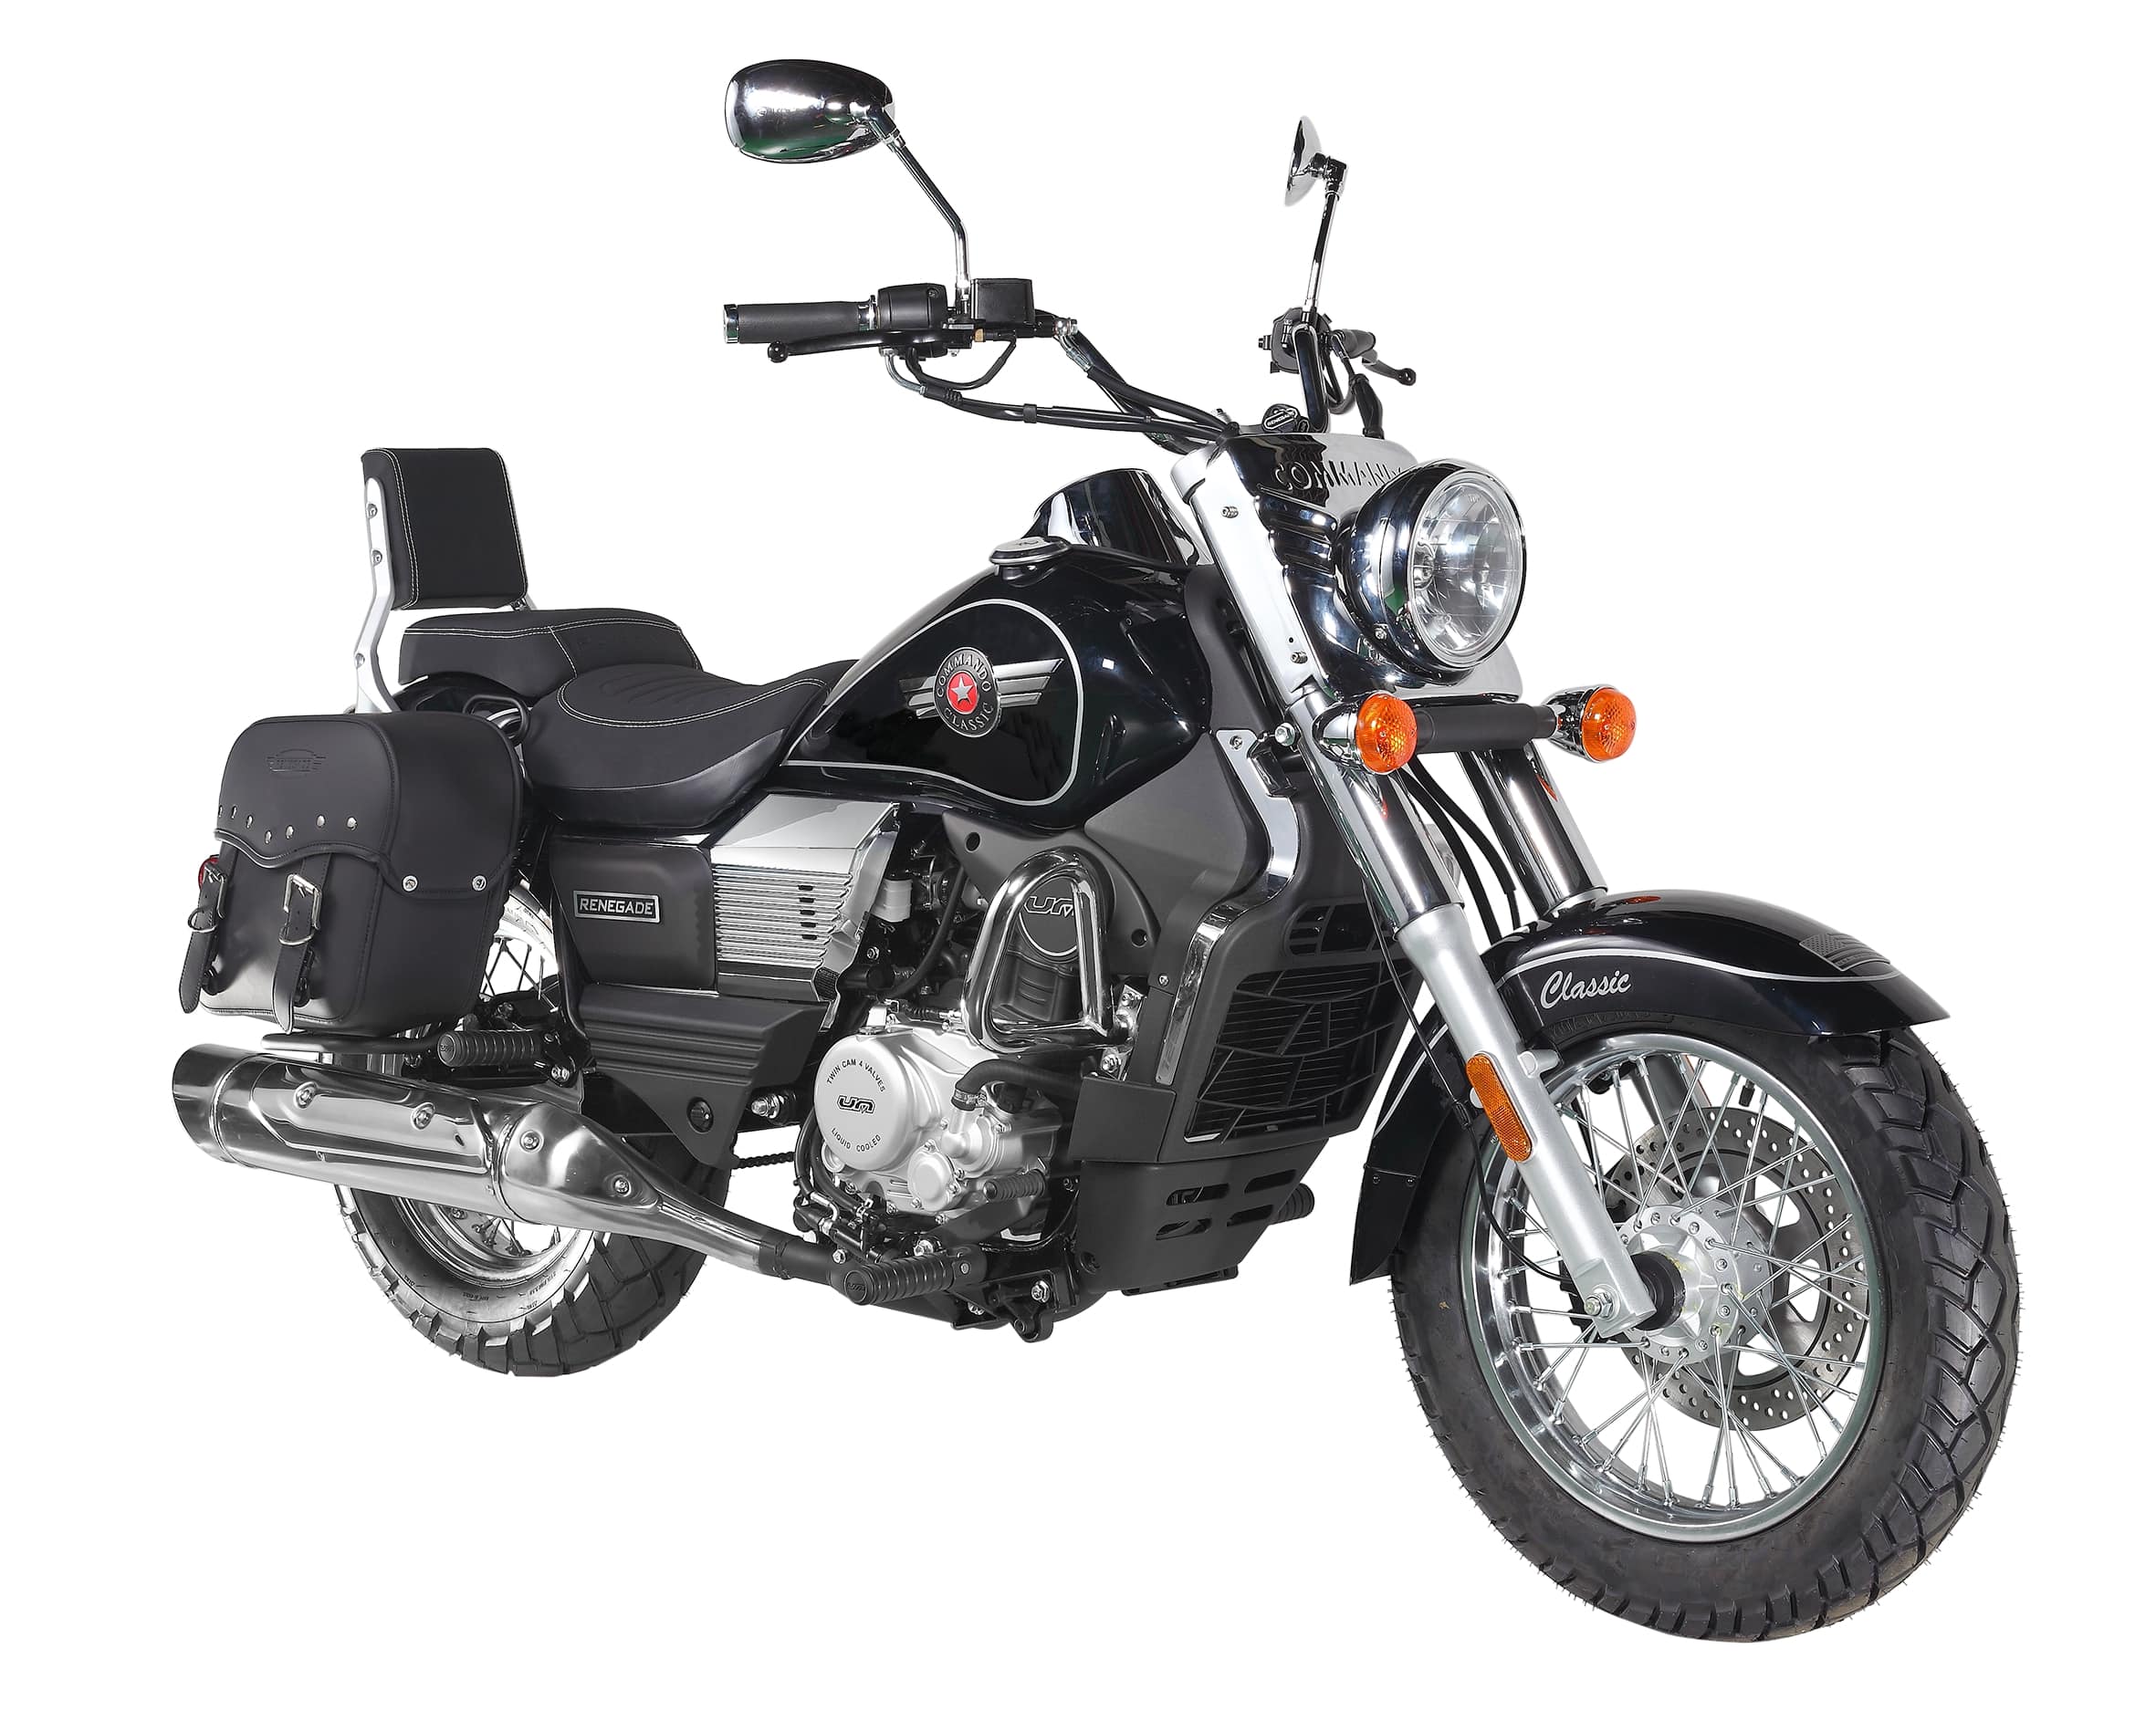 Commando classic 300 cc bs4 model - Motorcycles - 1741281386